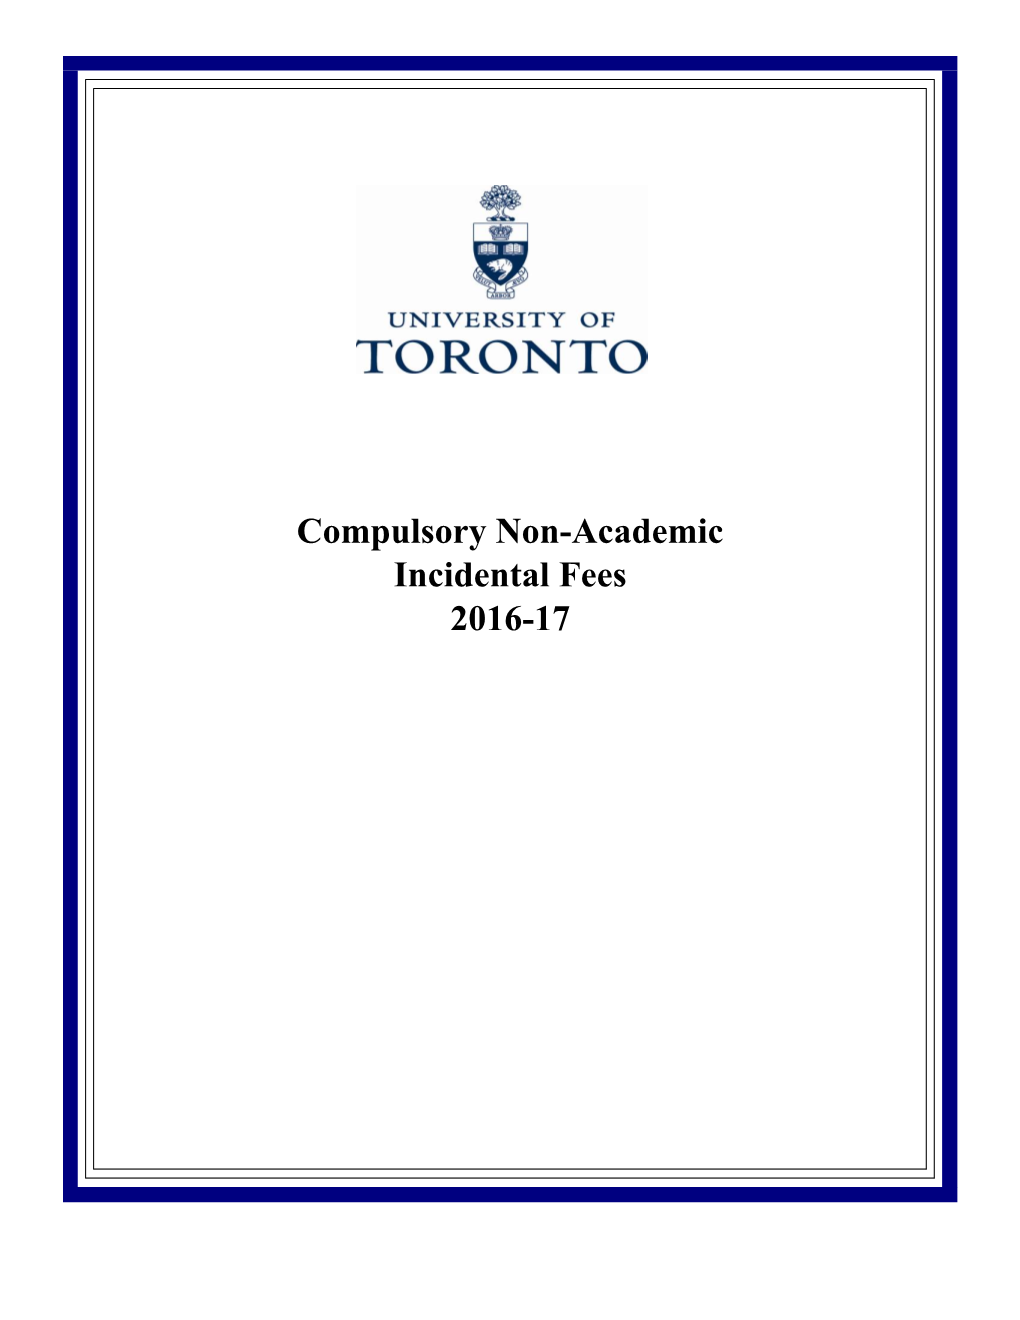 2016-17 Compulsory Non-Academic Incidental Fees Report